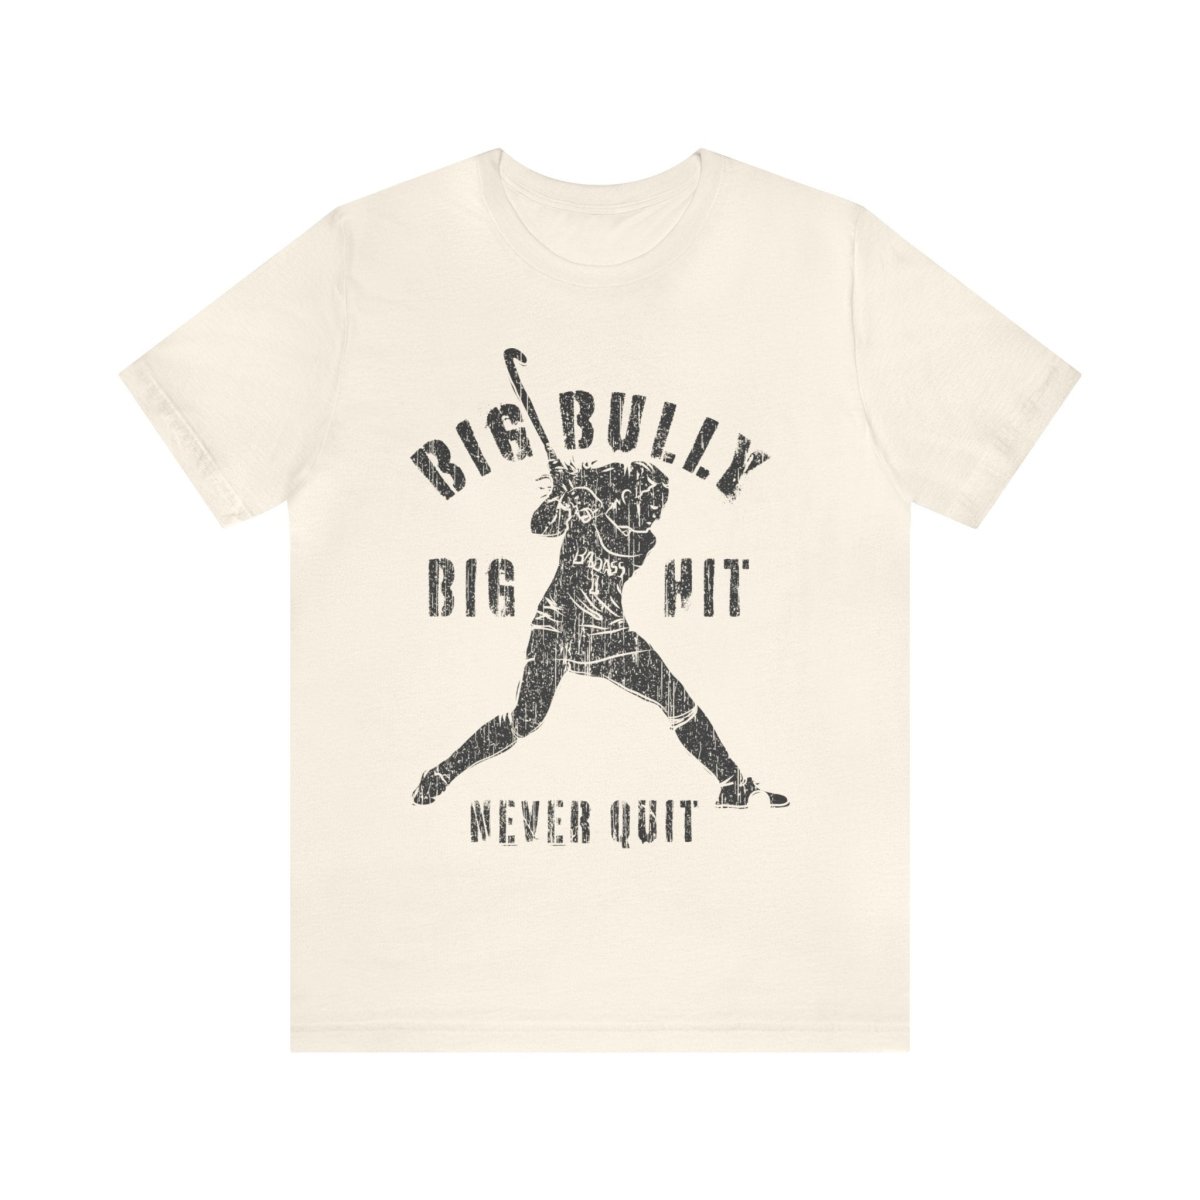 Field Hockey Premium T-Shirt, Big Bully, Big Hit, Never Quit, Women's